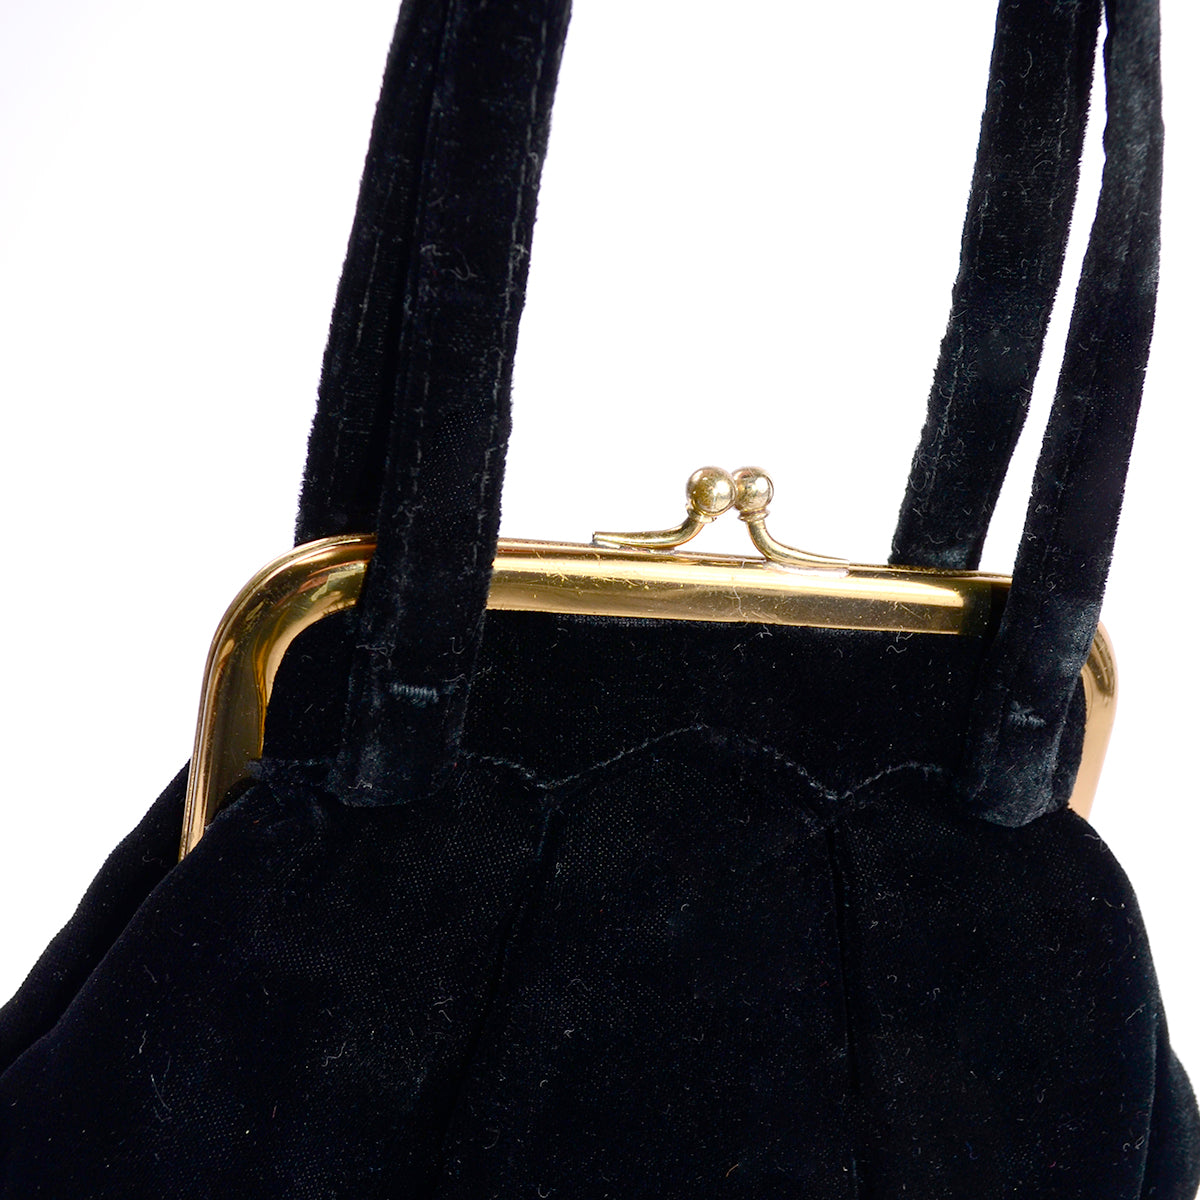 Morris Moskowitz Vintage Purse Handbag